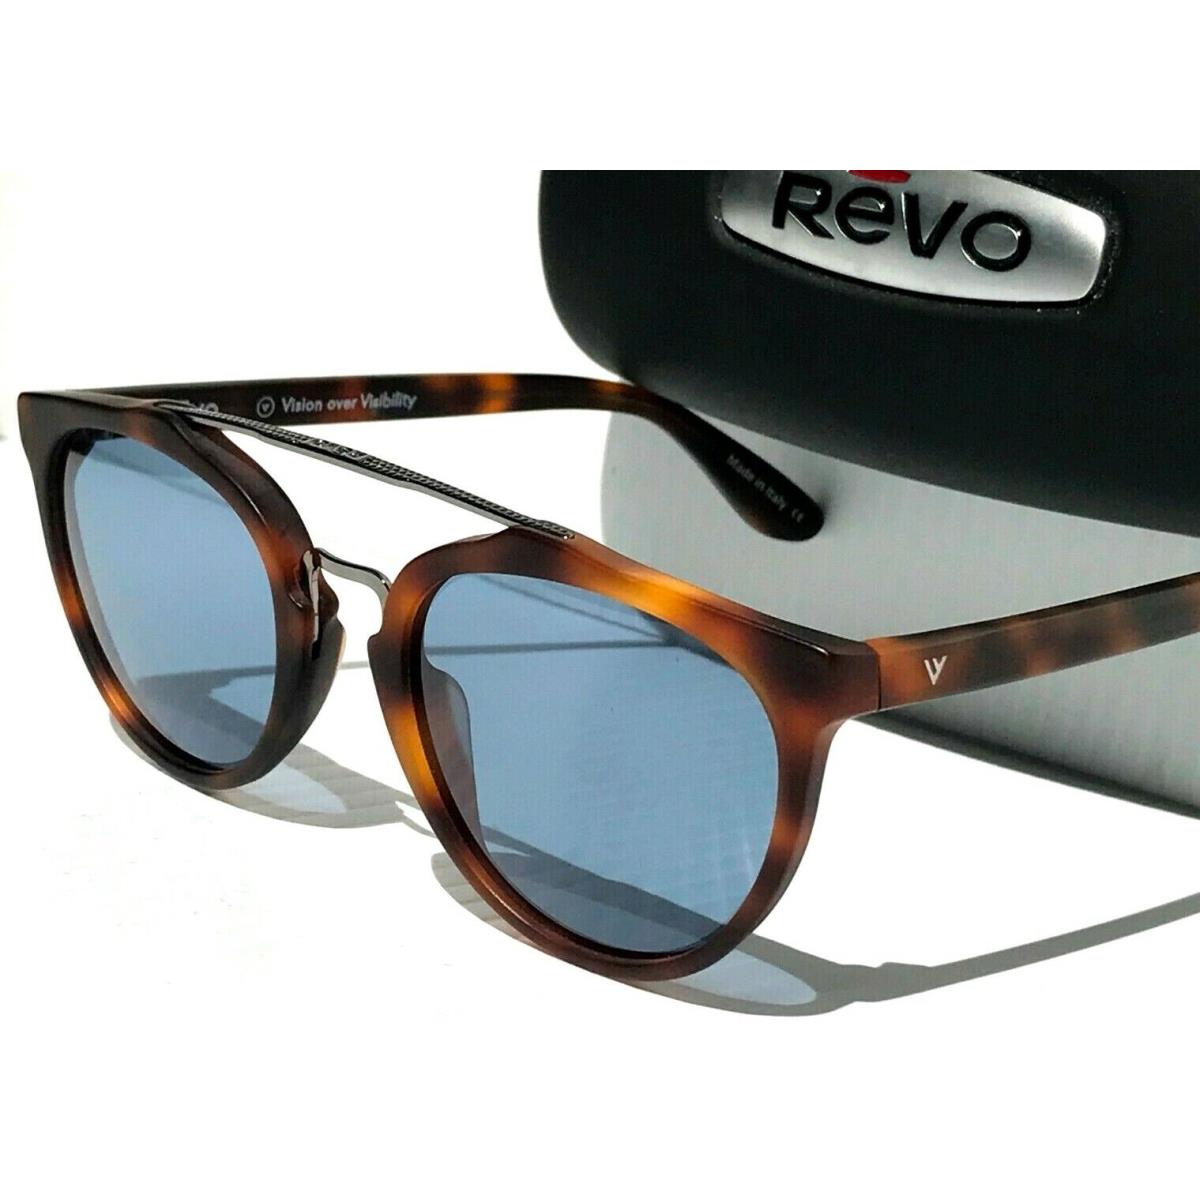 Revo sunglasses BUZZ - Tortoise Frame, Gray Lens